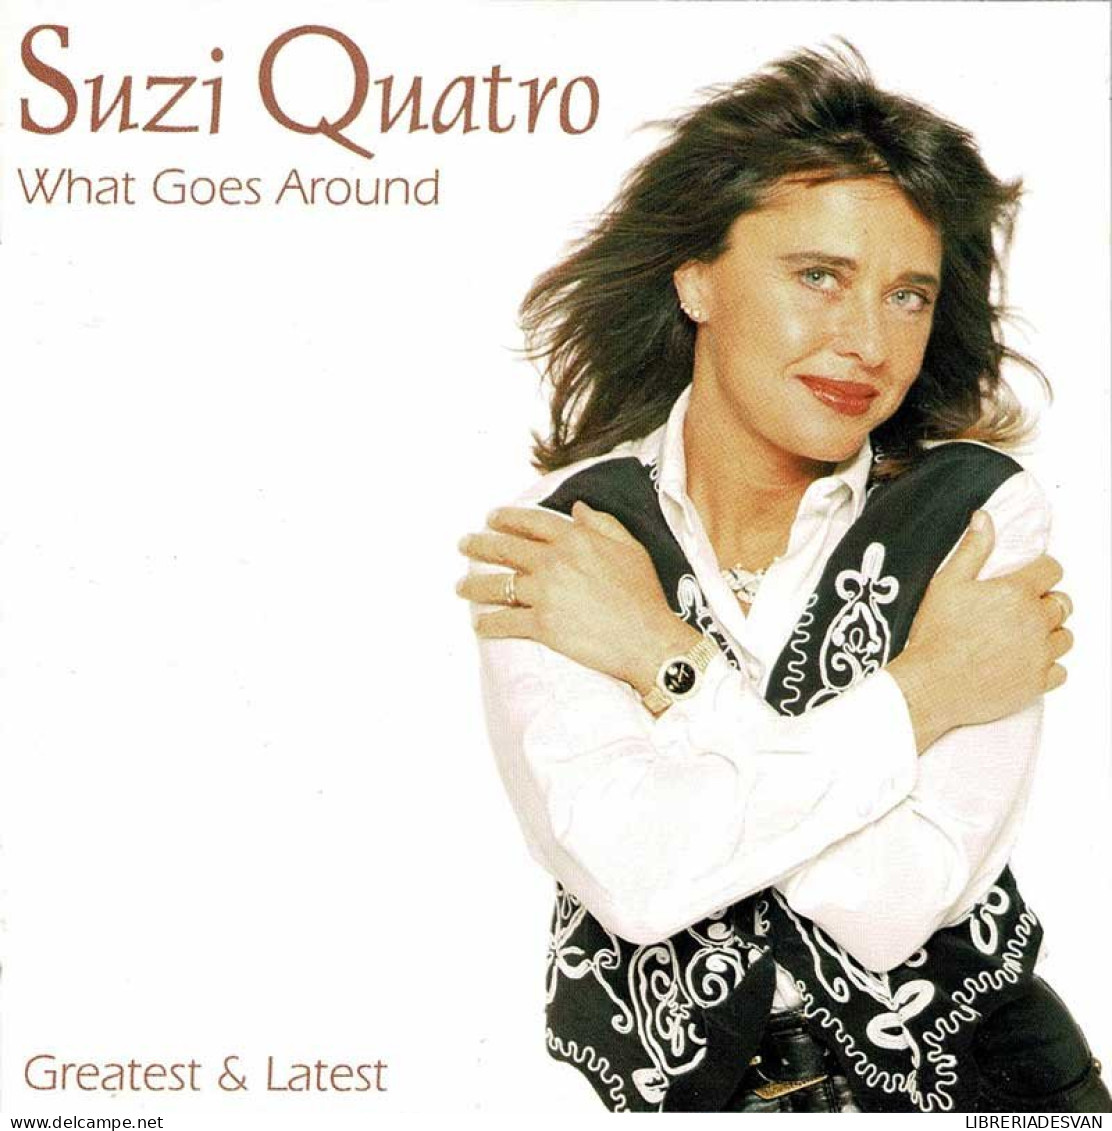 Suzi Quatro - What Goes Around - Greatest & Latest. CD - Disco, Pop